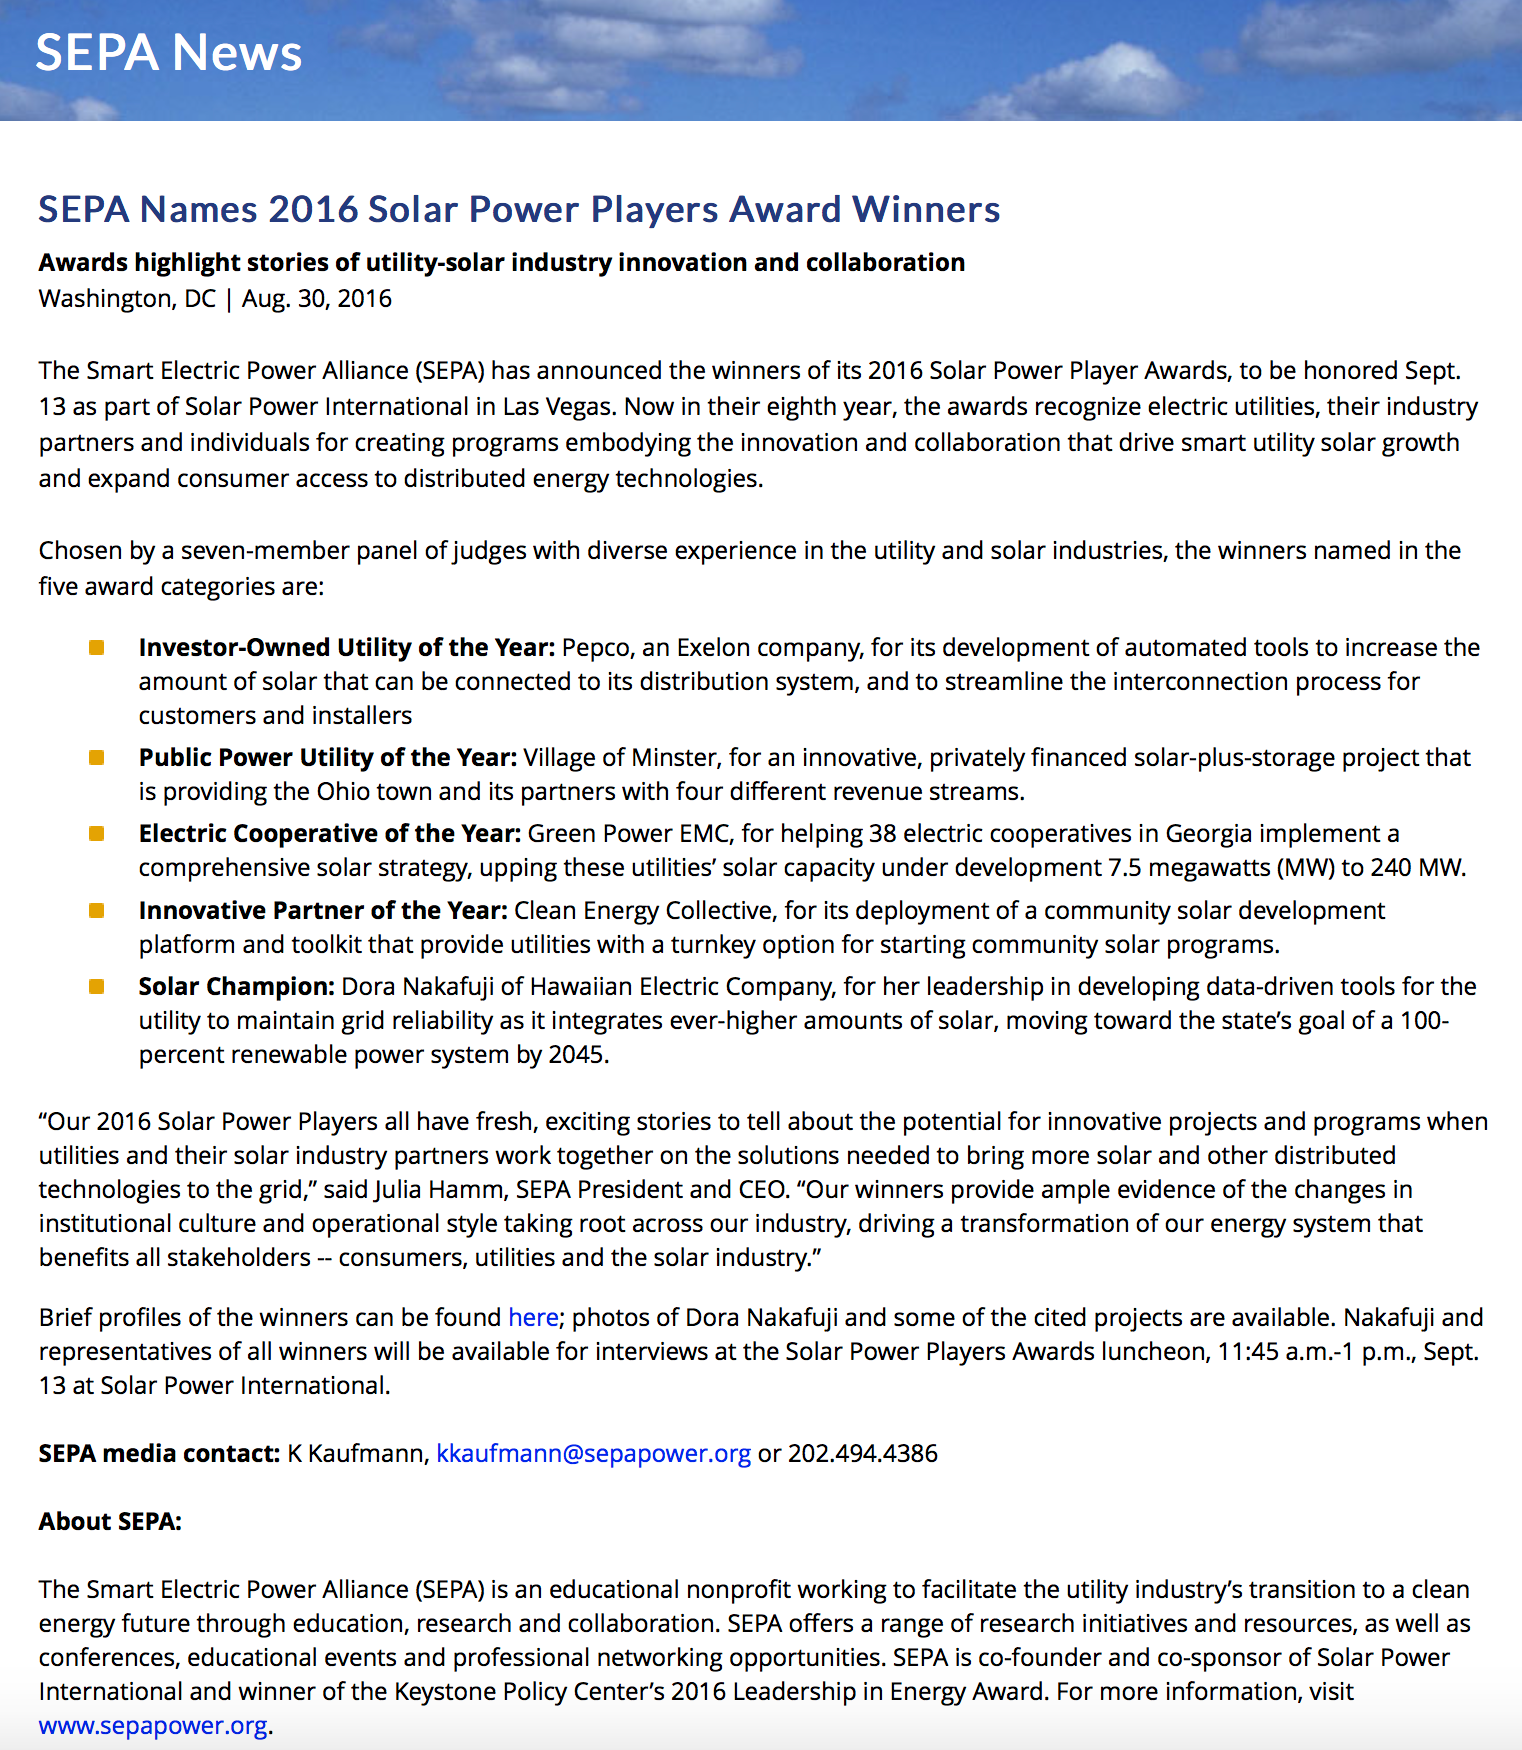 SEPA Press Release